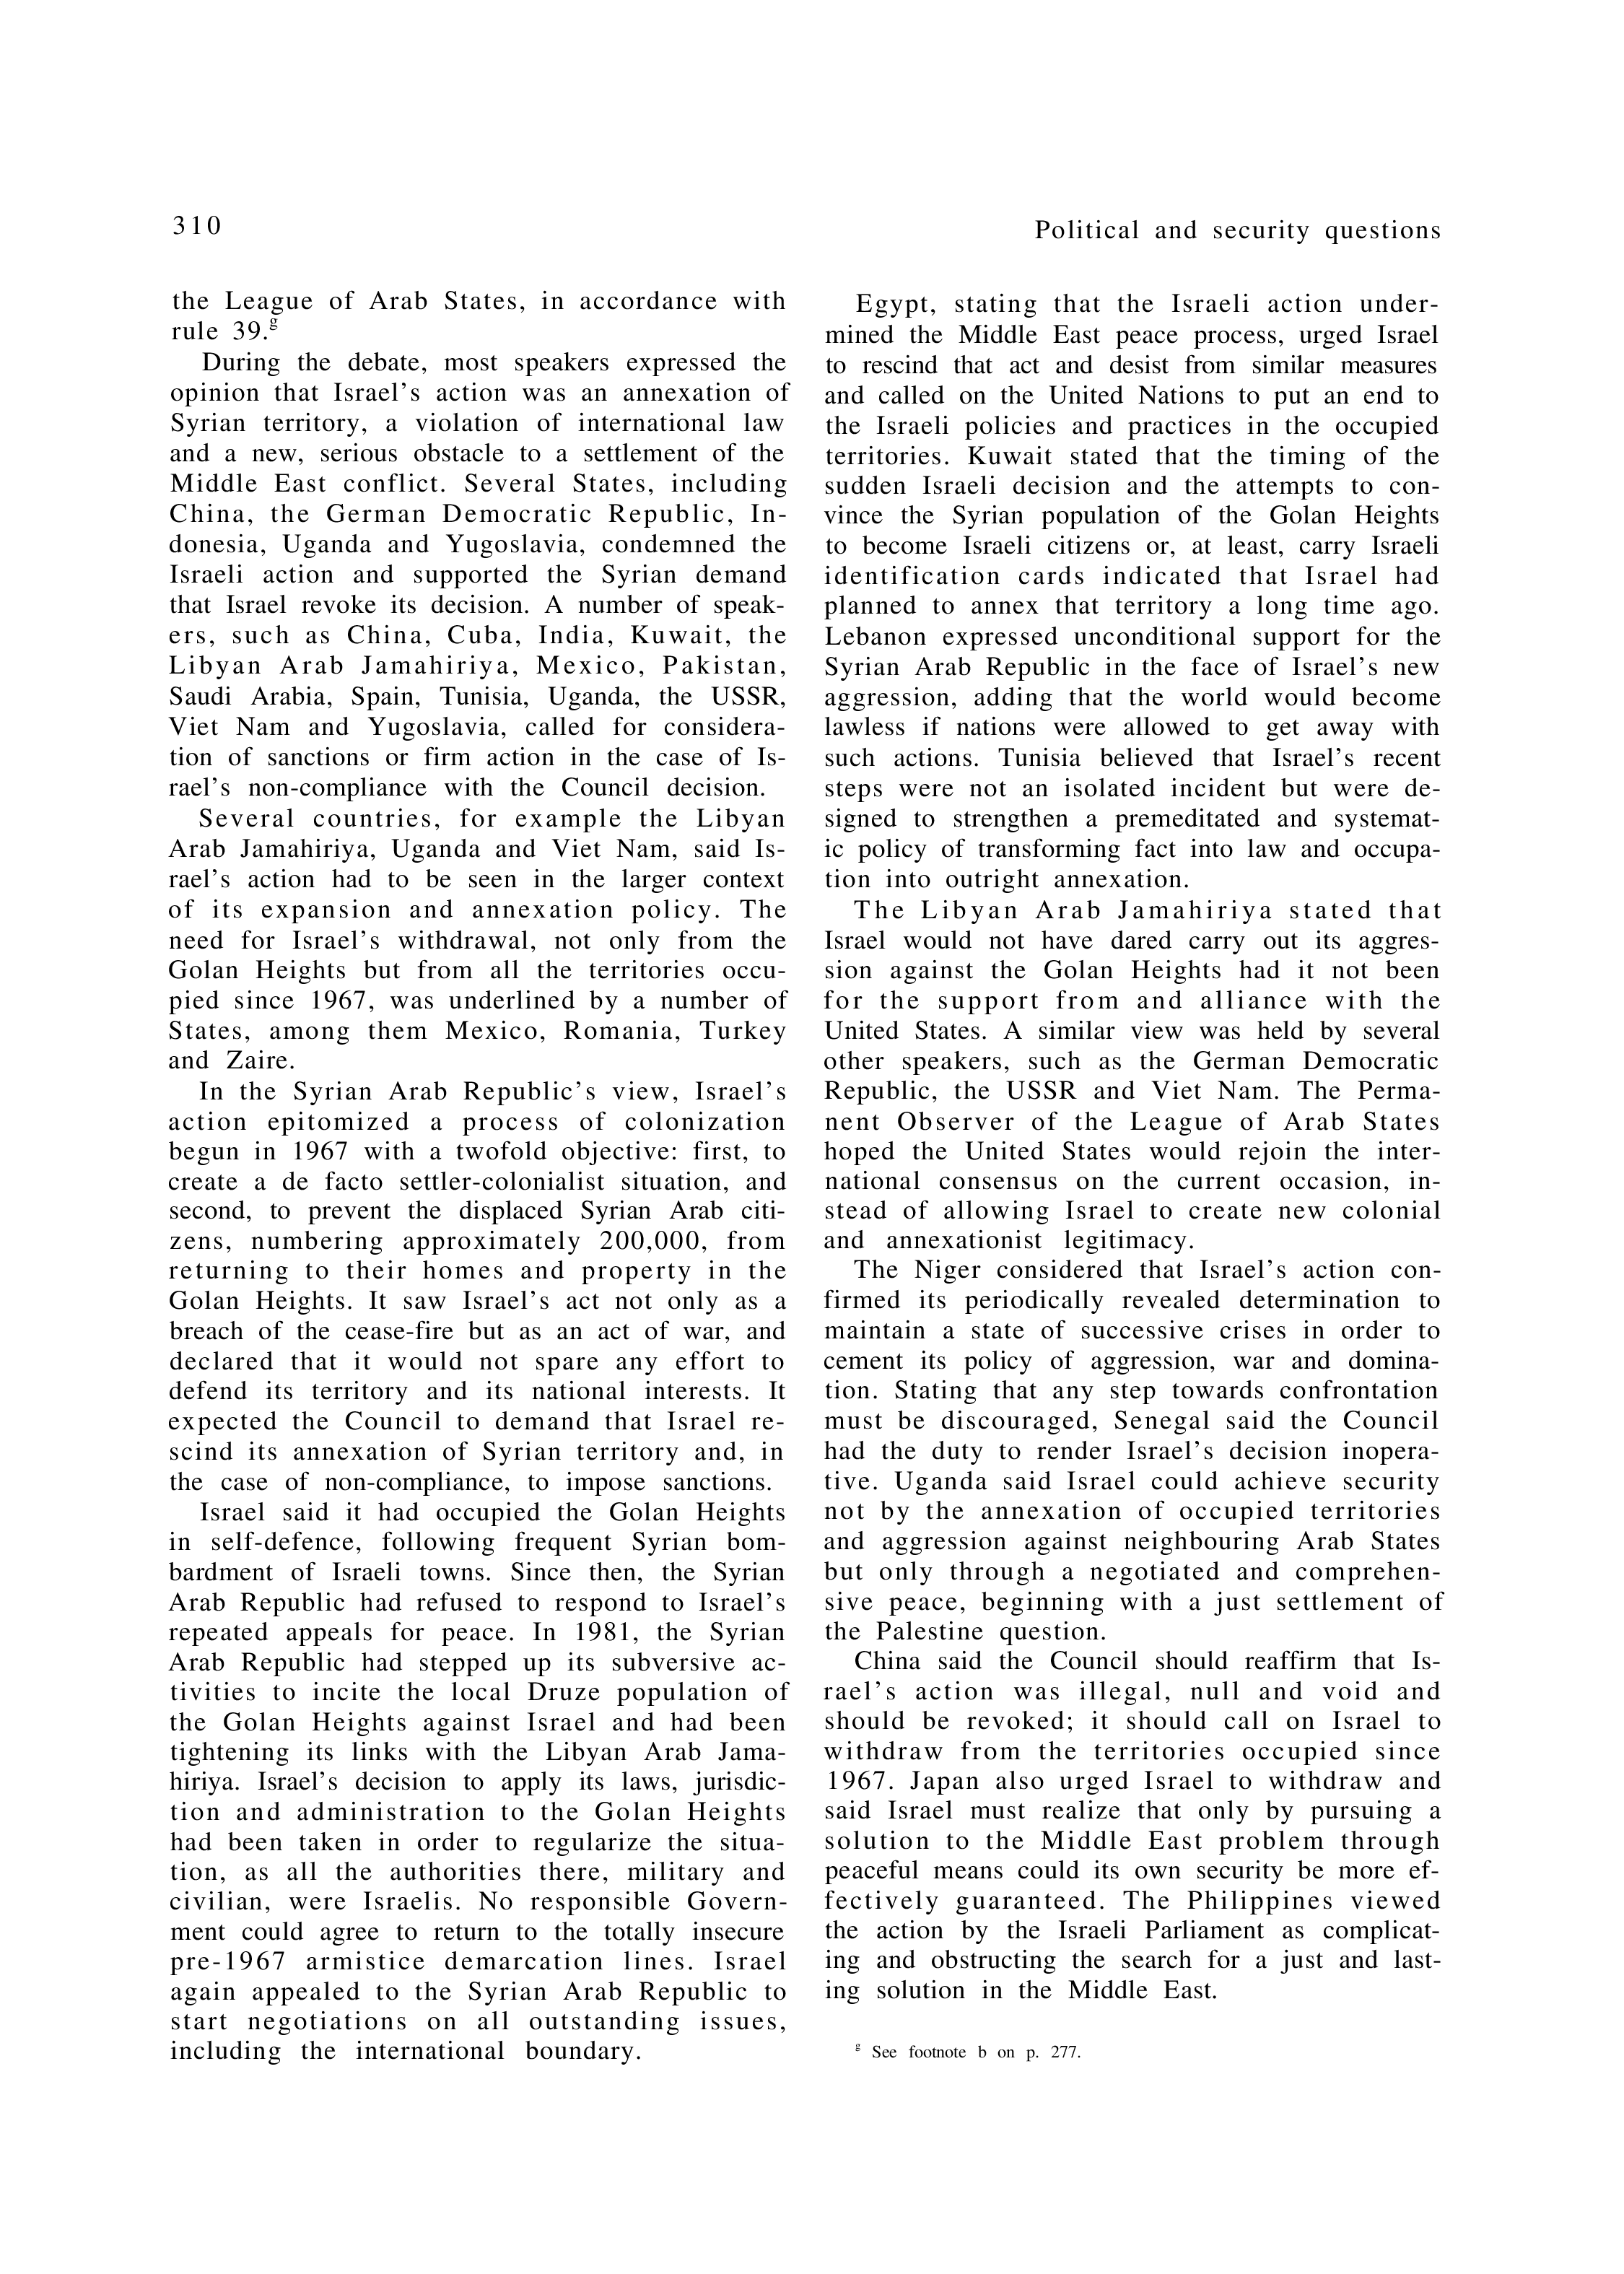 YUN Volume_Page 1981_322